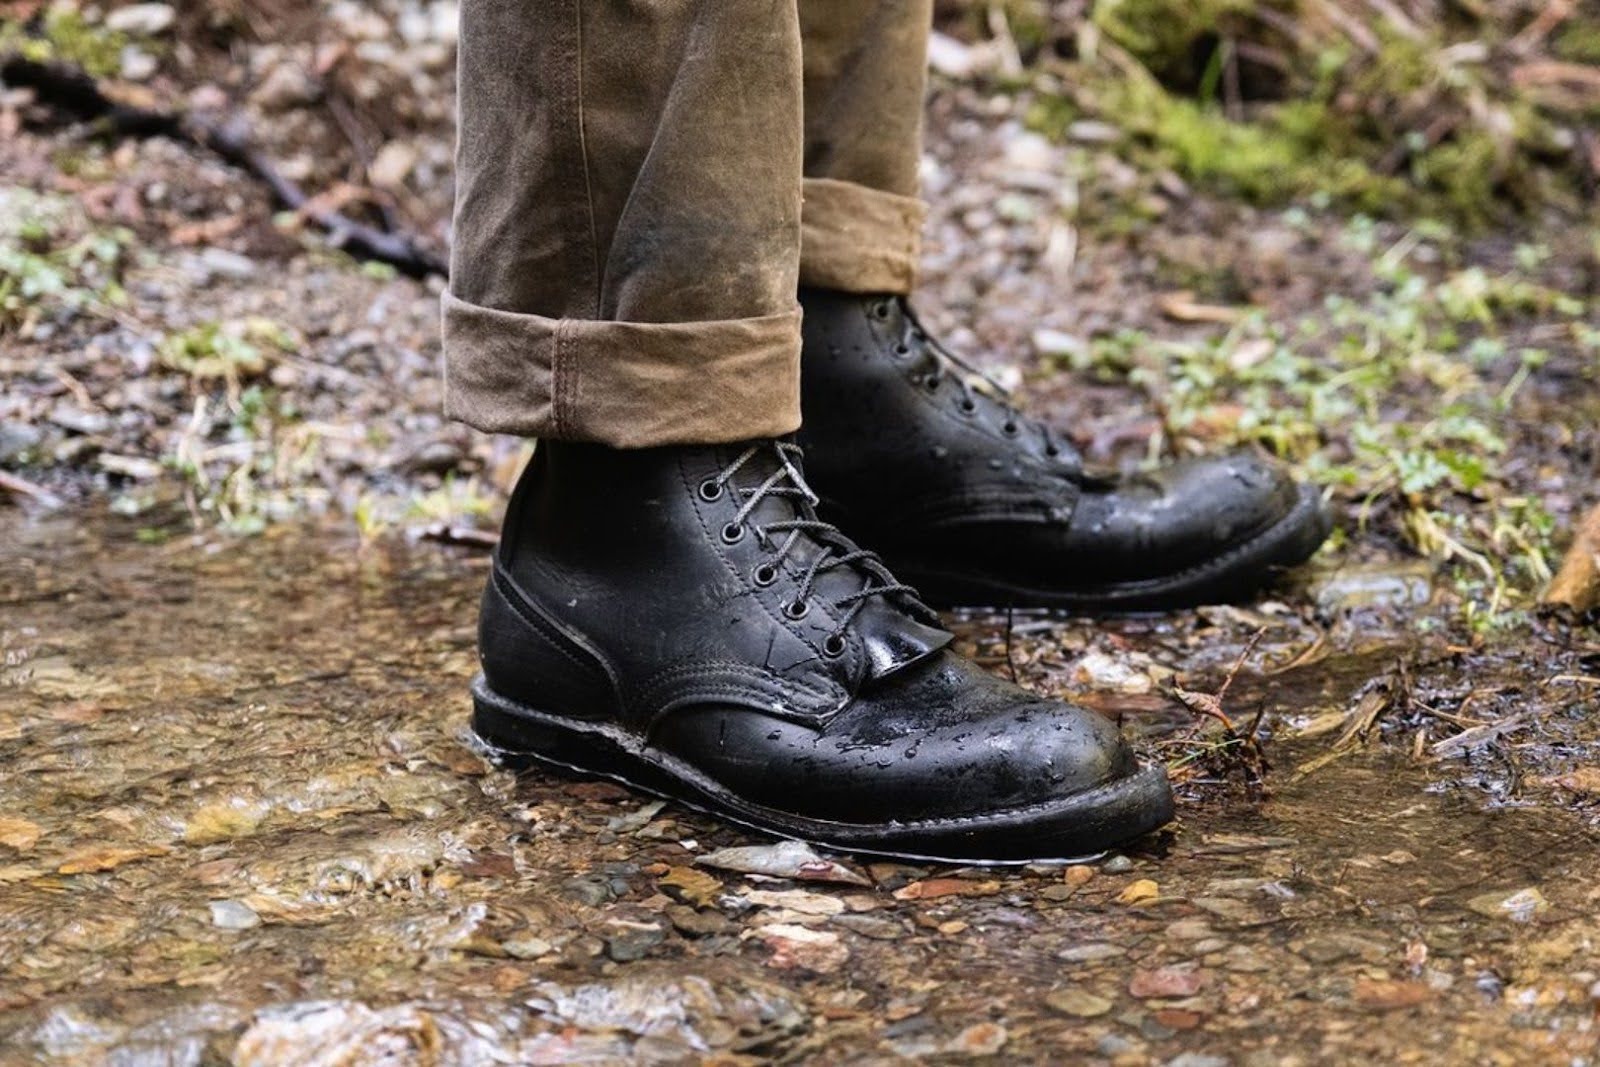 Benefits Of Wearing Waterproof Boots